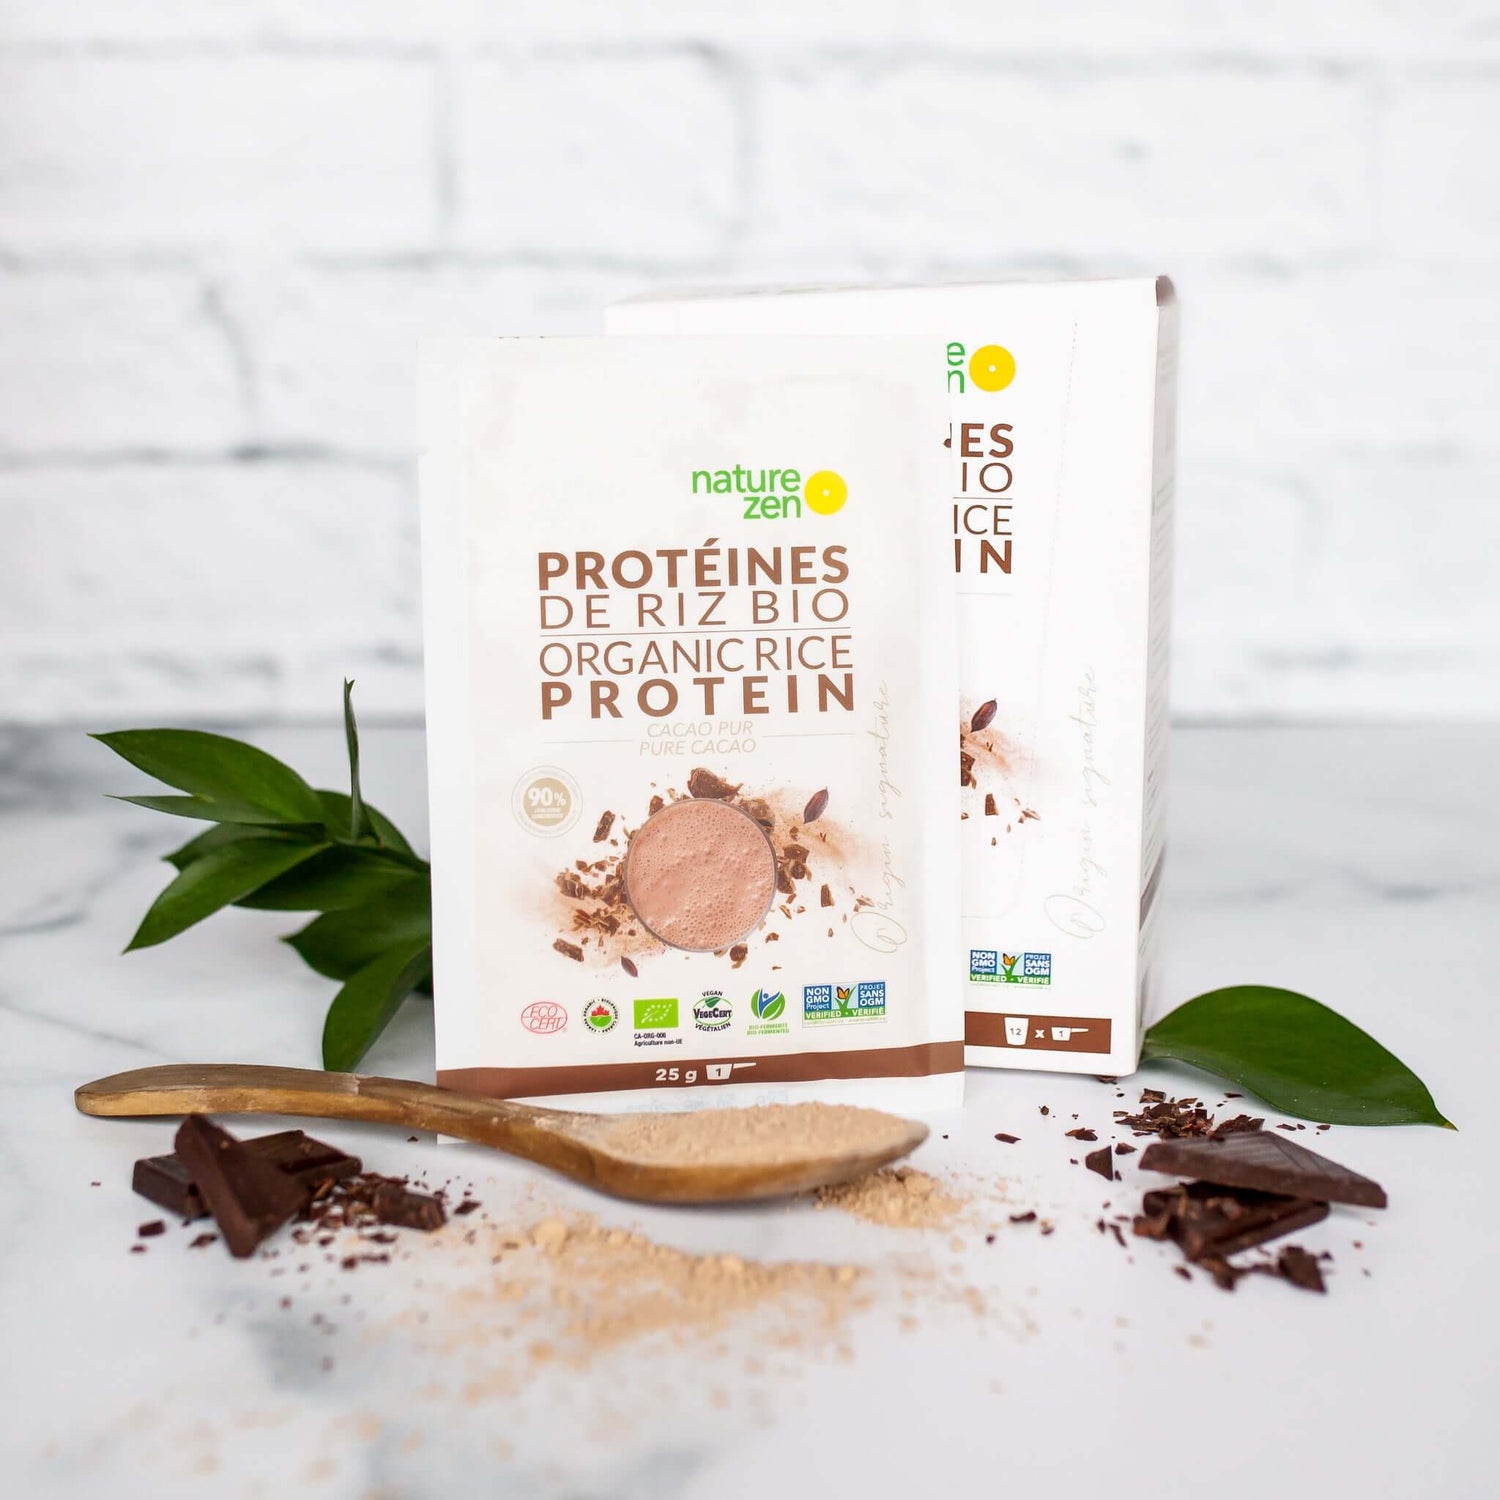 Nature Zen Origin - Organic Rice Protein Powder - Cacao (25g)